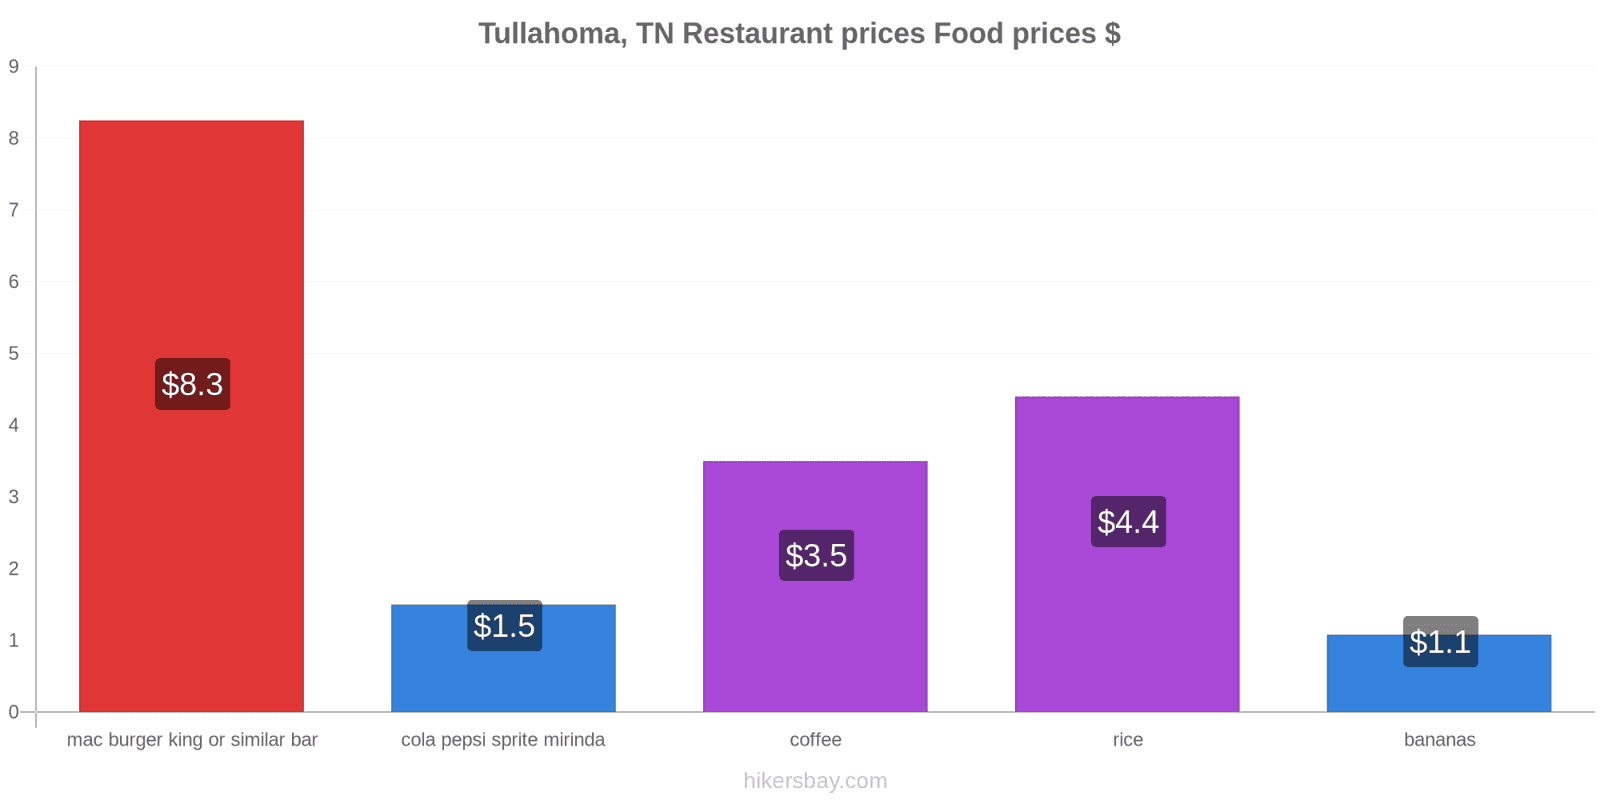 Tullahoma, TN price changes hikersbay.com